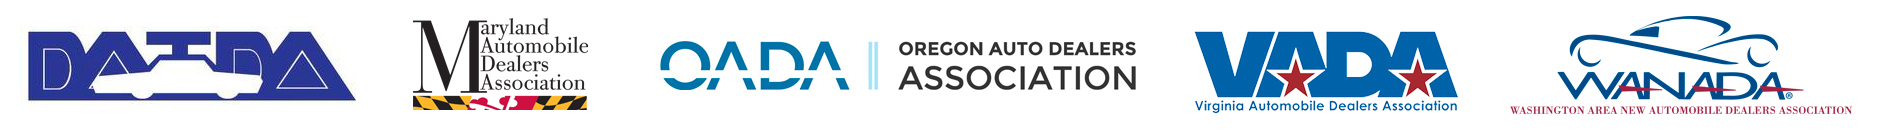 Auto association logos